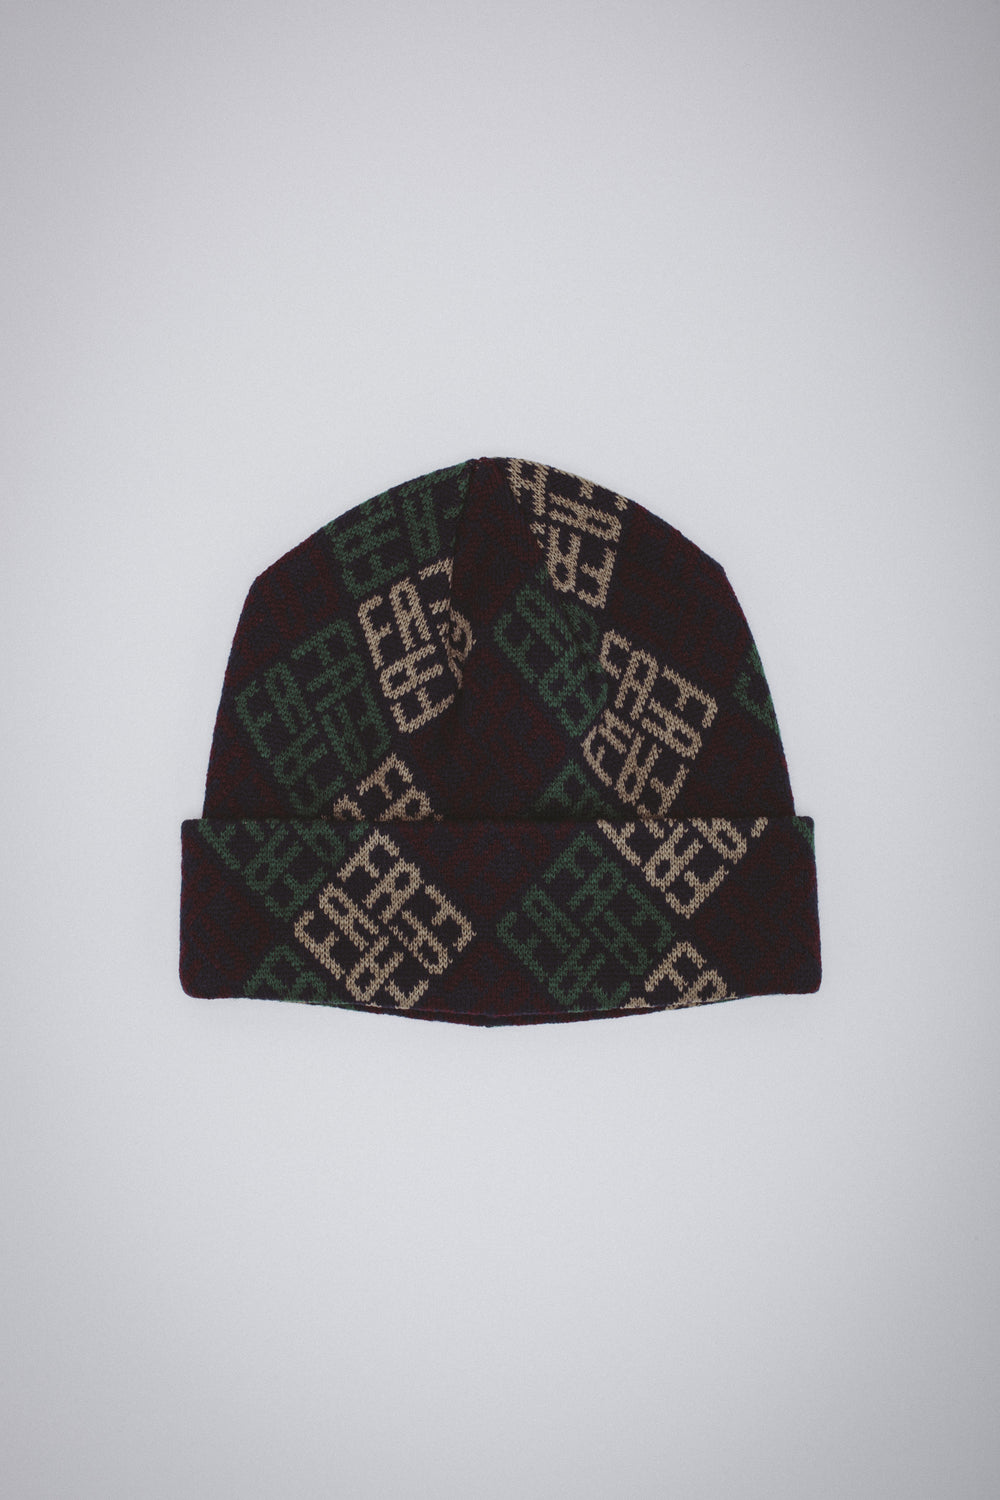 Louis Vuitton Monogram Cashmere Beanie - Brown Hats, Accessories